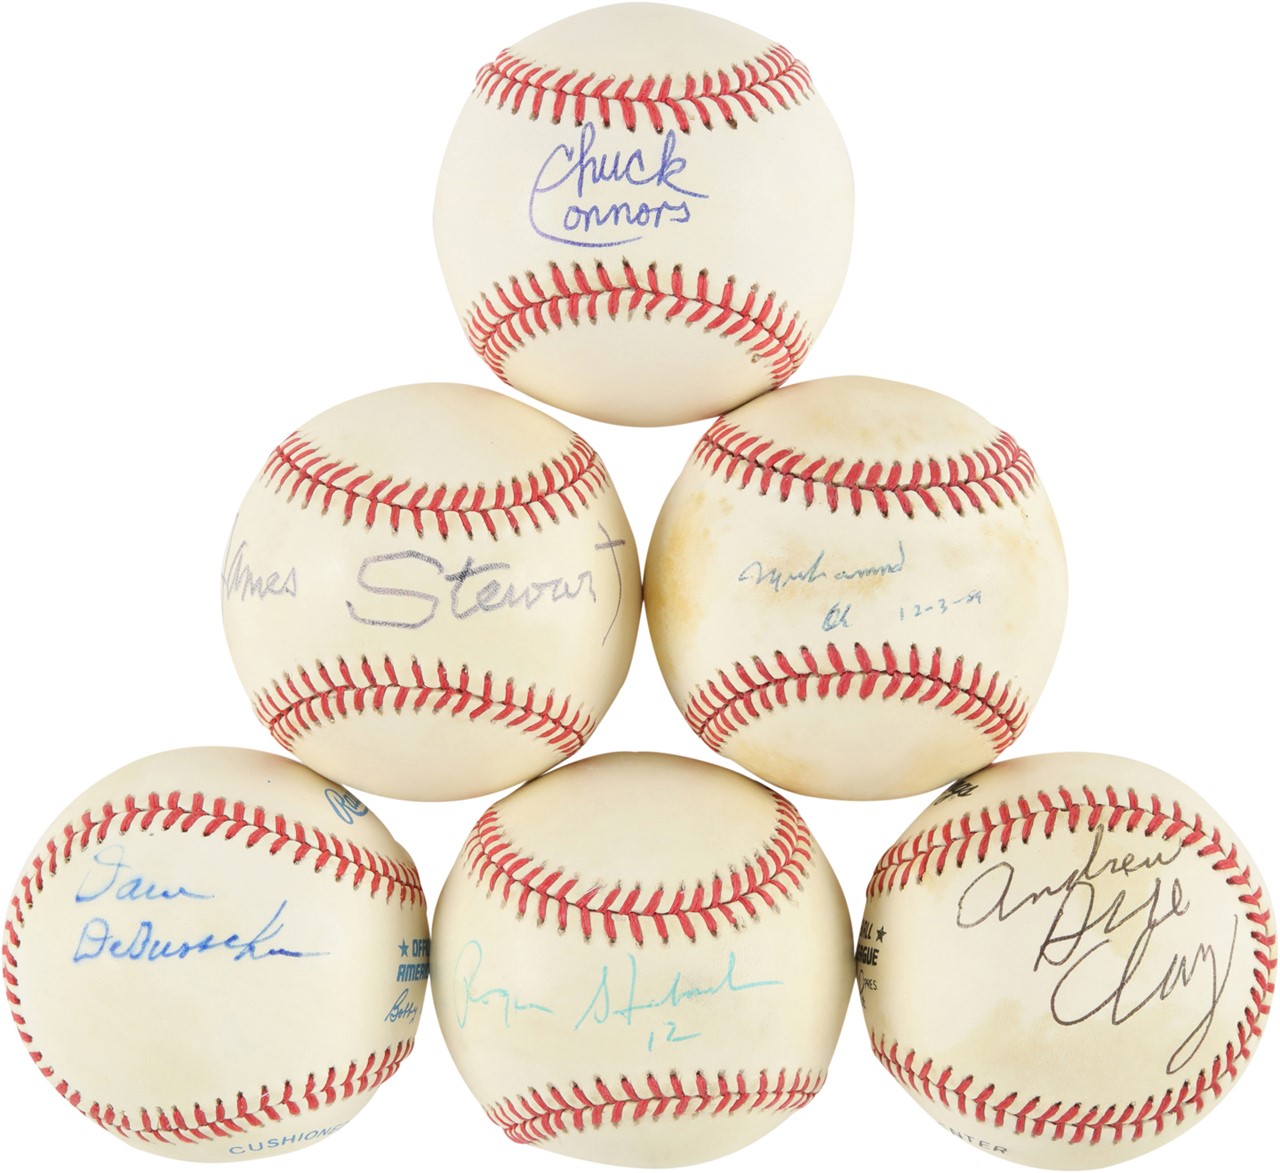 Baseball Autographs - Multi-Sport and Entertainment Single-Signed Baseballs with Muhammad Ali - Some JSA (6)